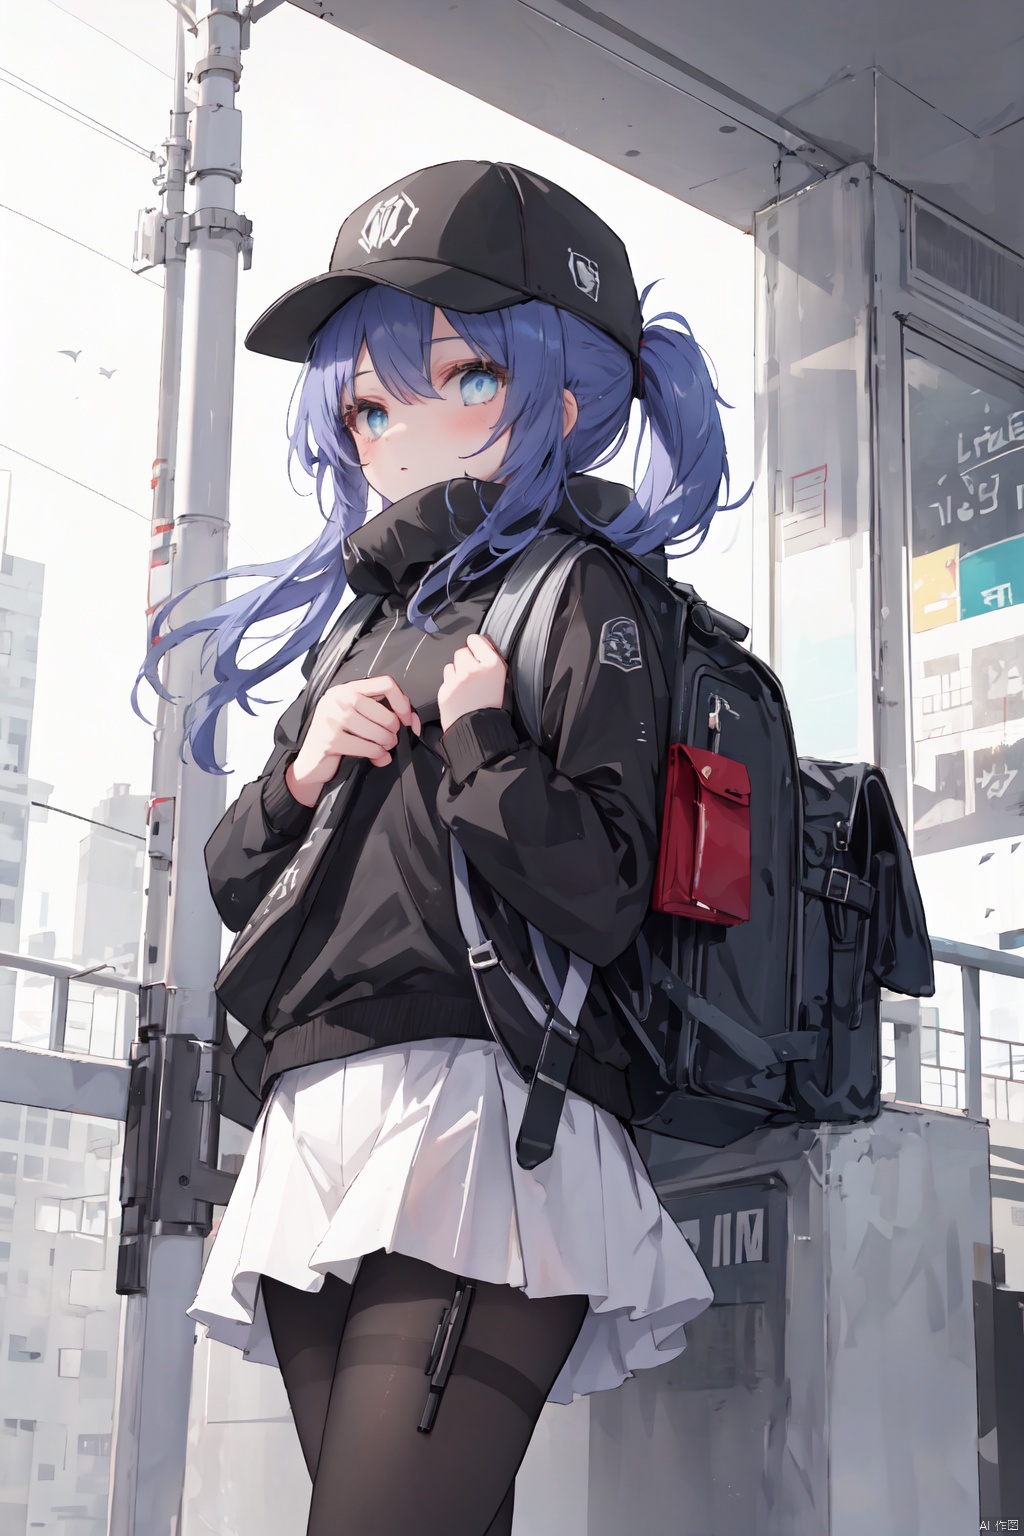  1girl, assault_rifle, backpack, bag, baseball_cap, black_headwear, white pantyhose